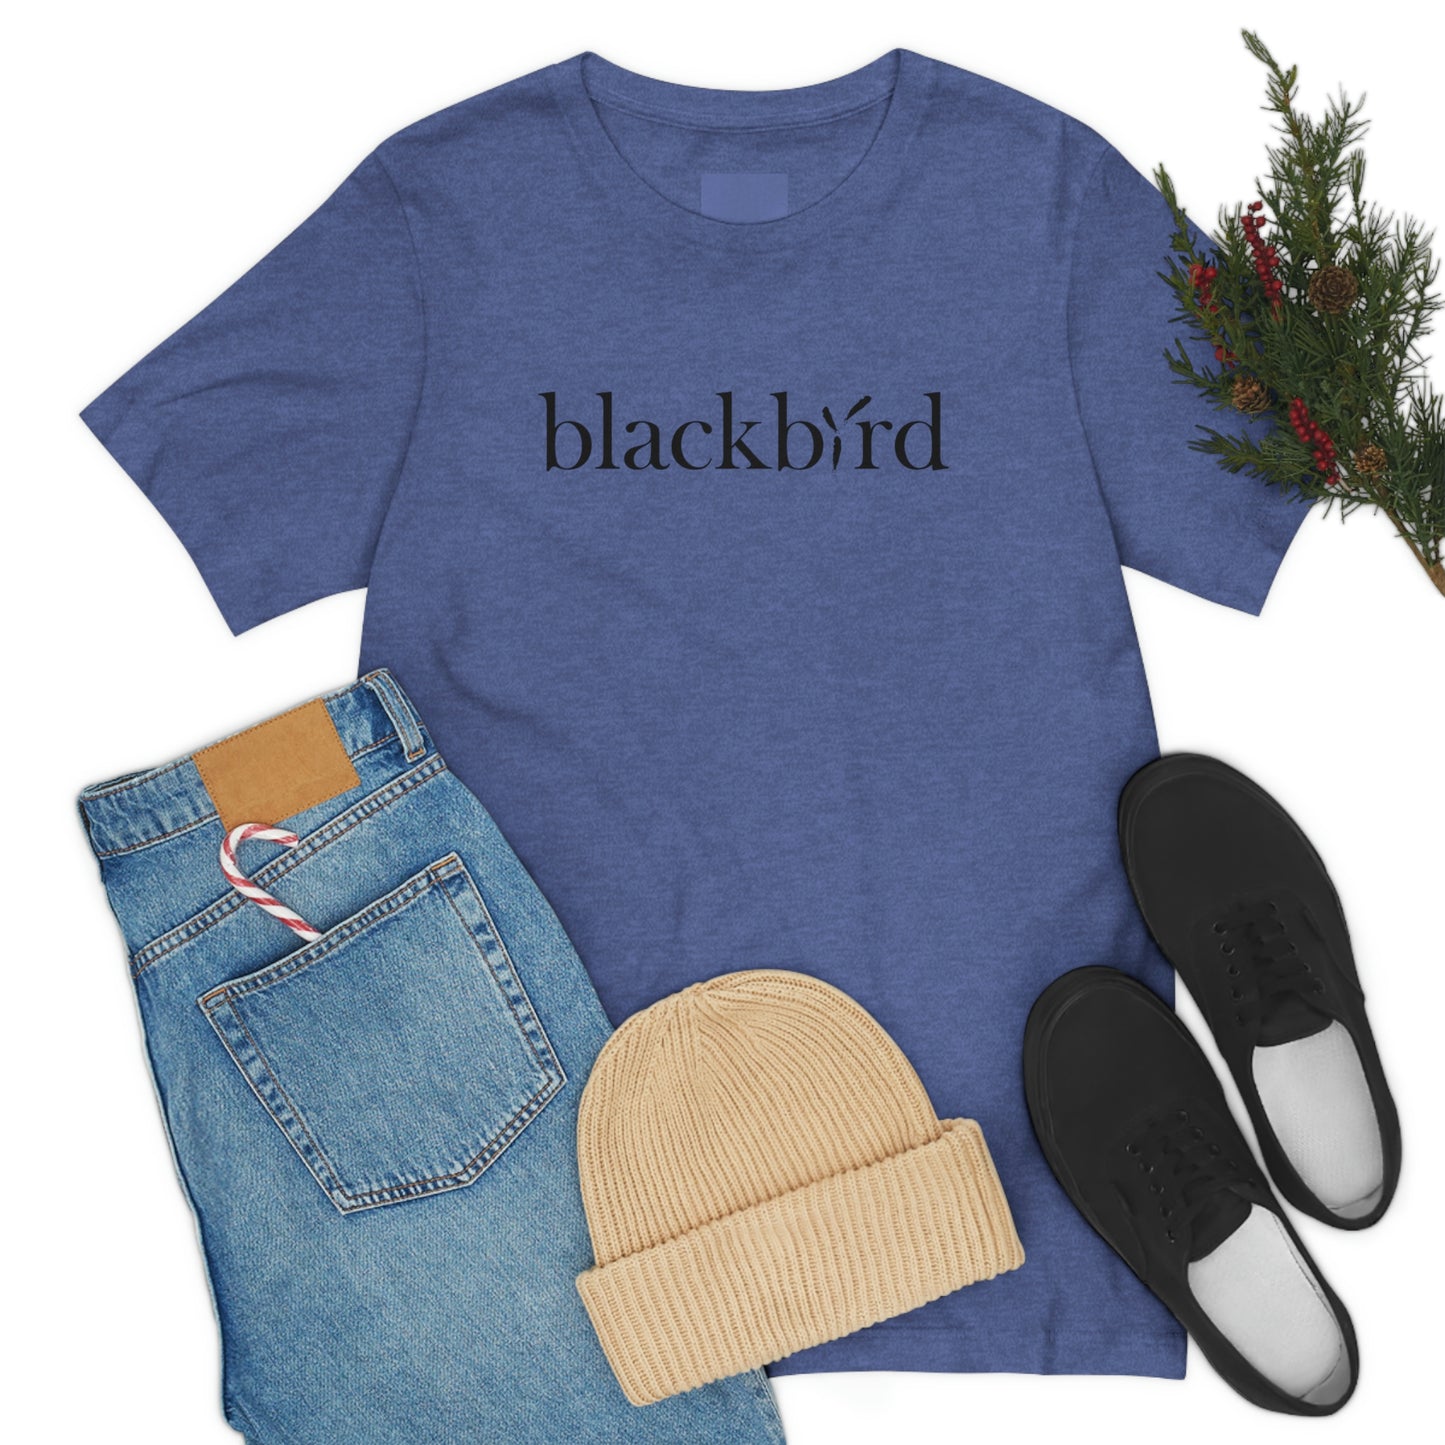 Blackbird Navy Blue Short Sleeve Tee